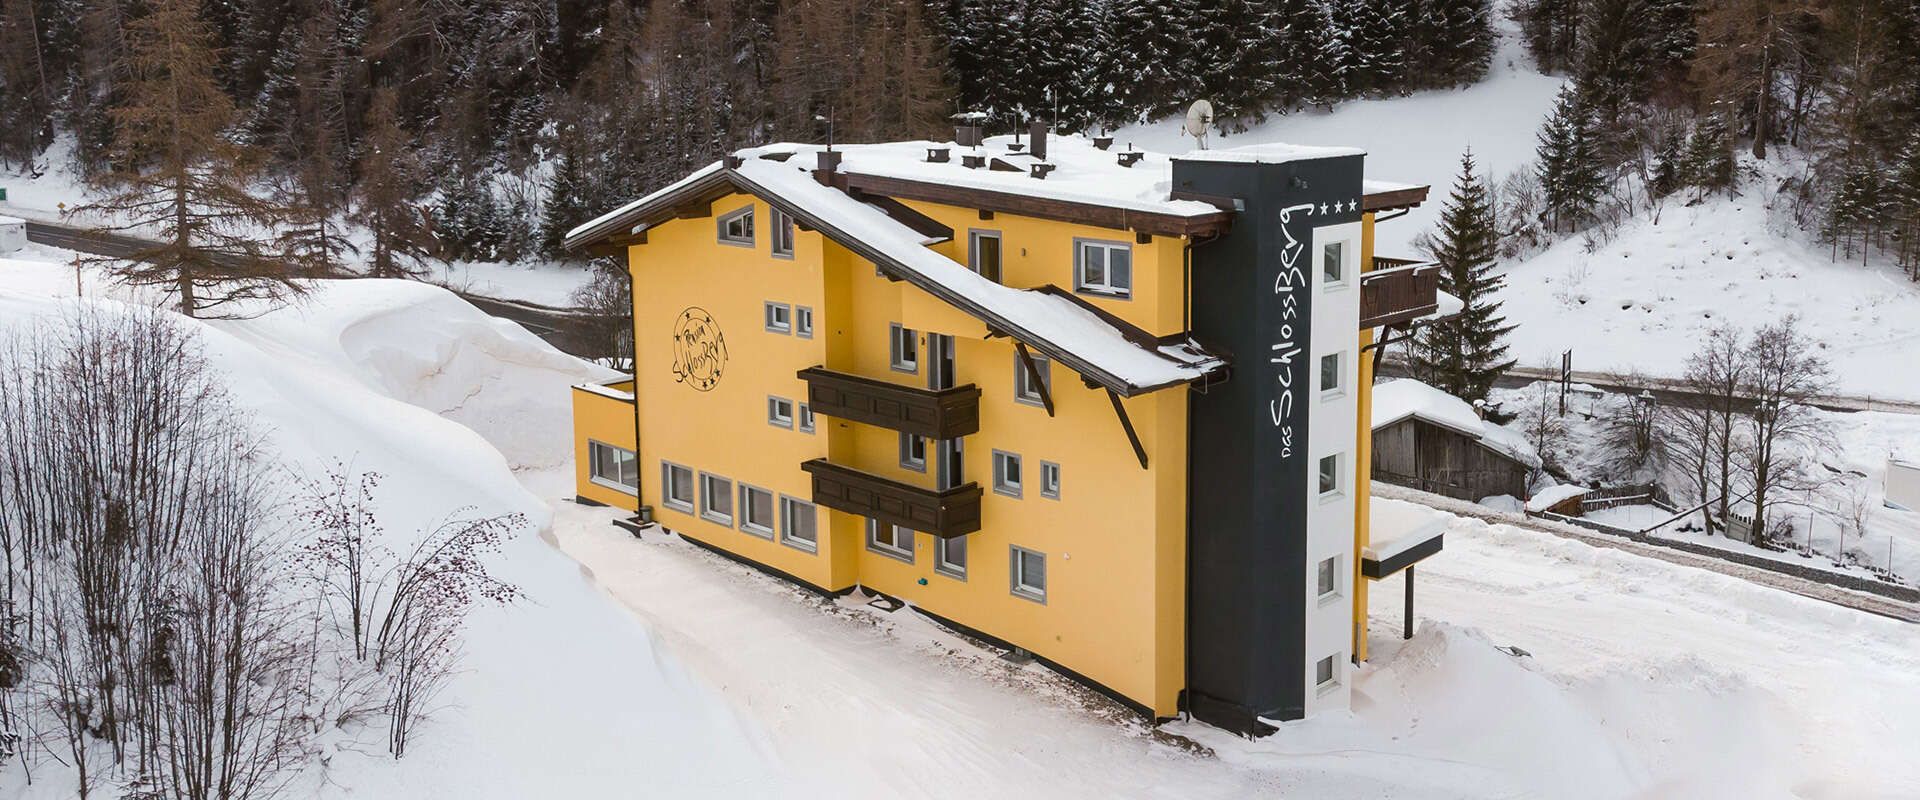 Hotel Das Schlossberg in Tyrol in winter